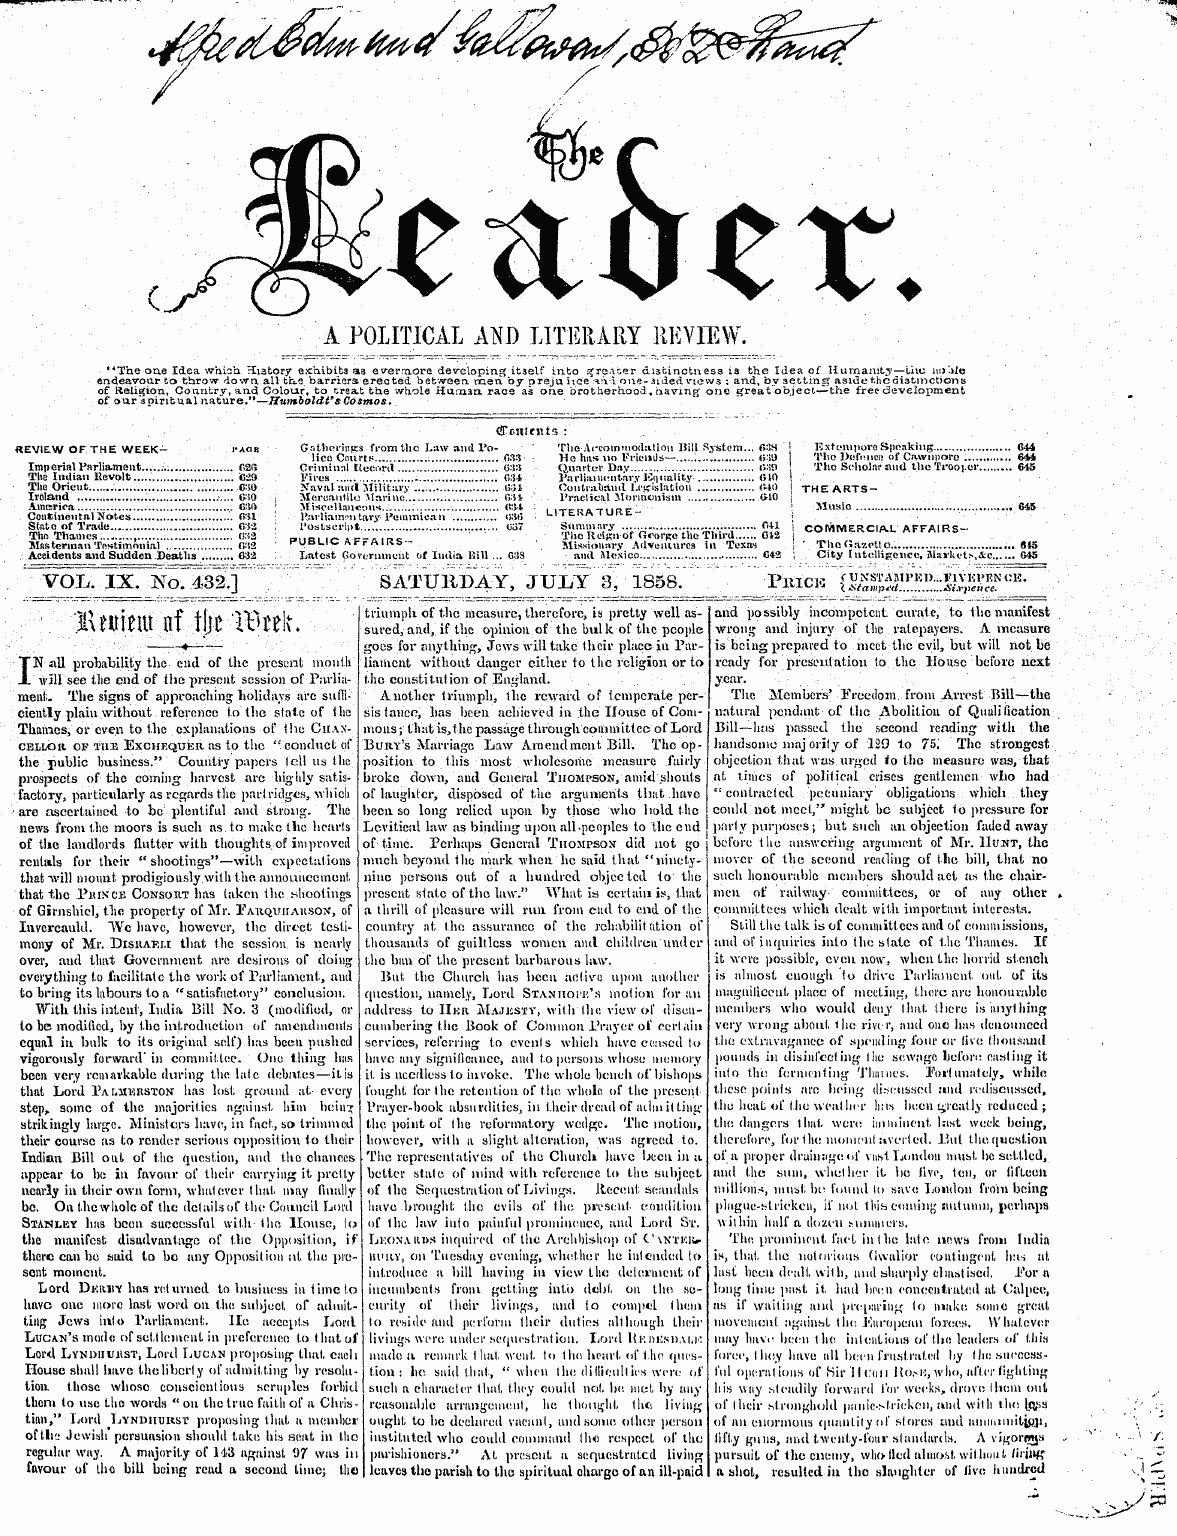 Leader (1850-1860): jS F Y, 2nd edition - " Vozr. Ix. No; 432'] " Saturday, Jult 3...